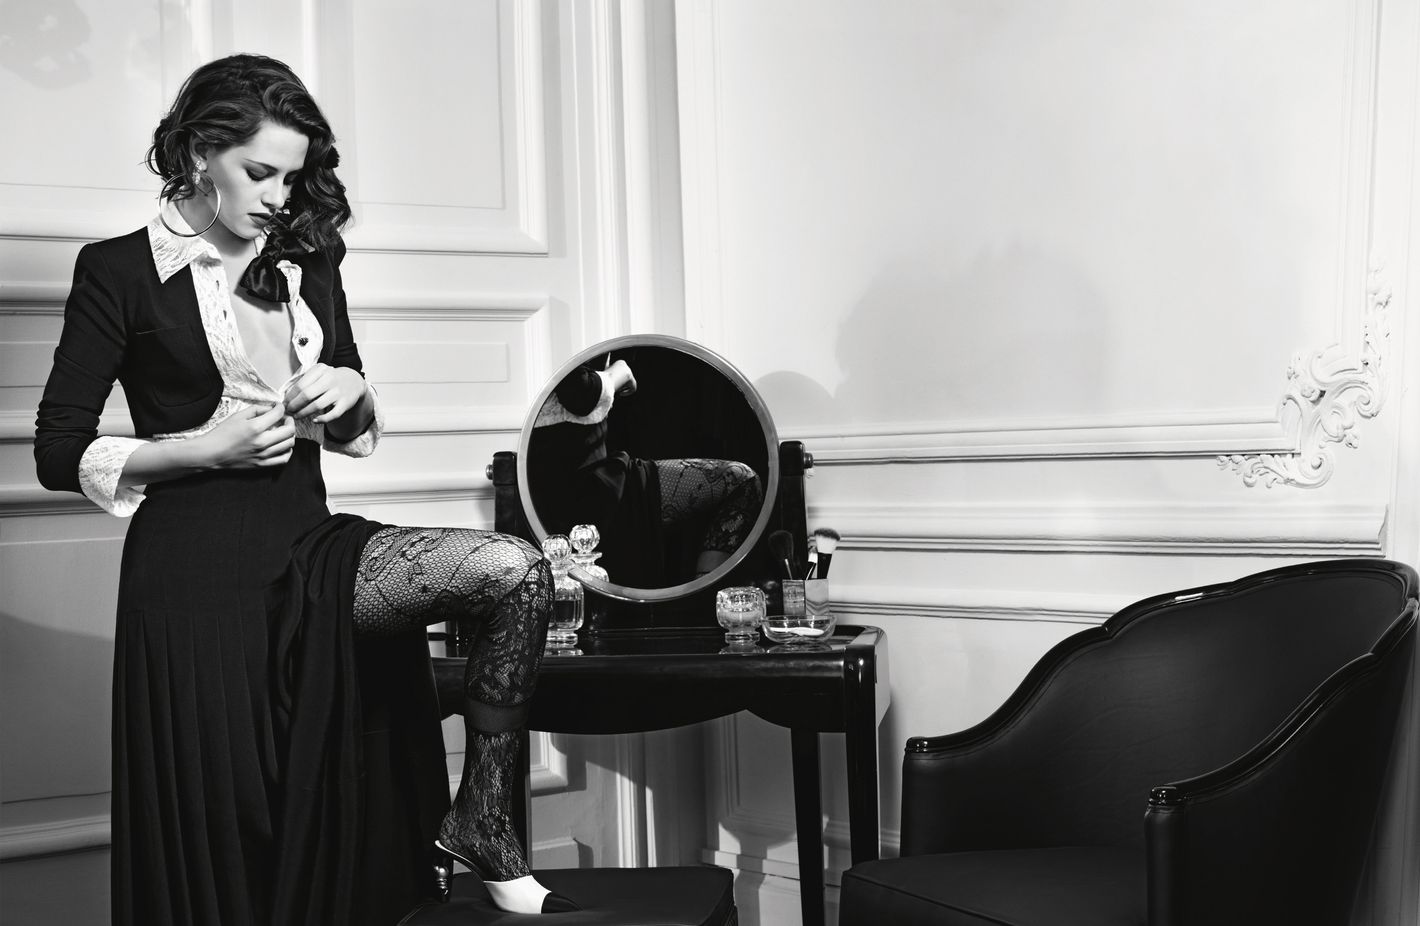 Inside Chanel's Campaign Starring Kristen Stewart